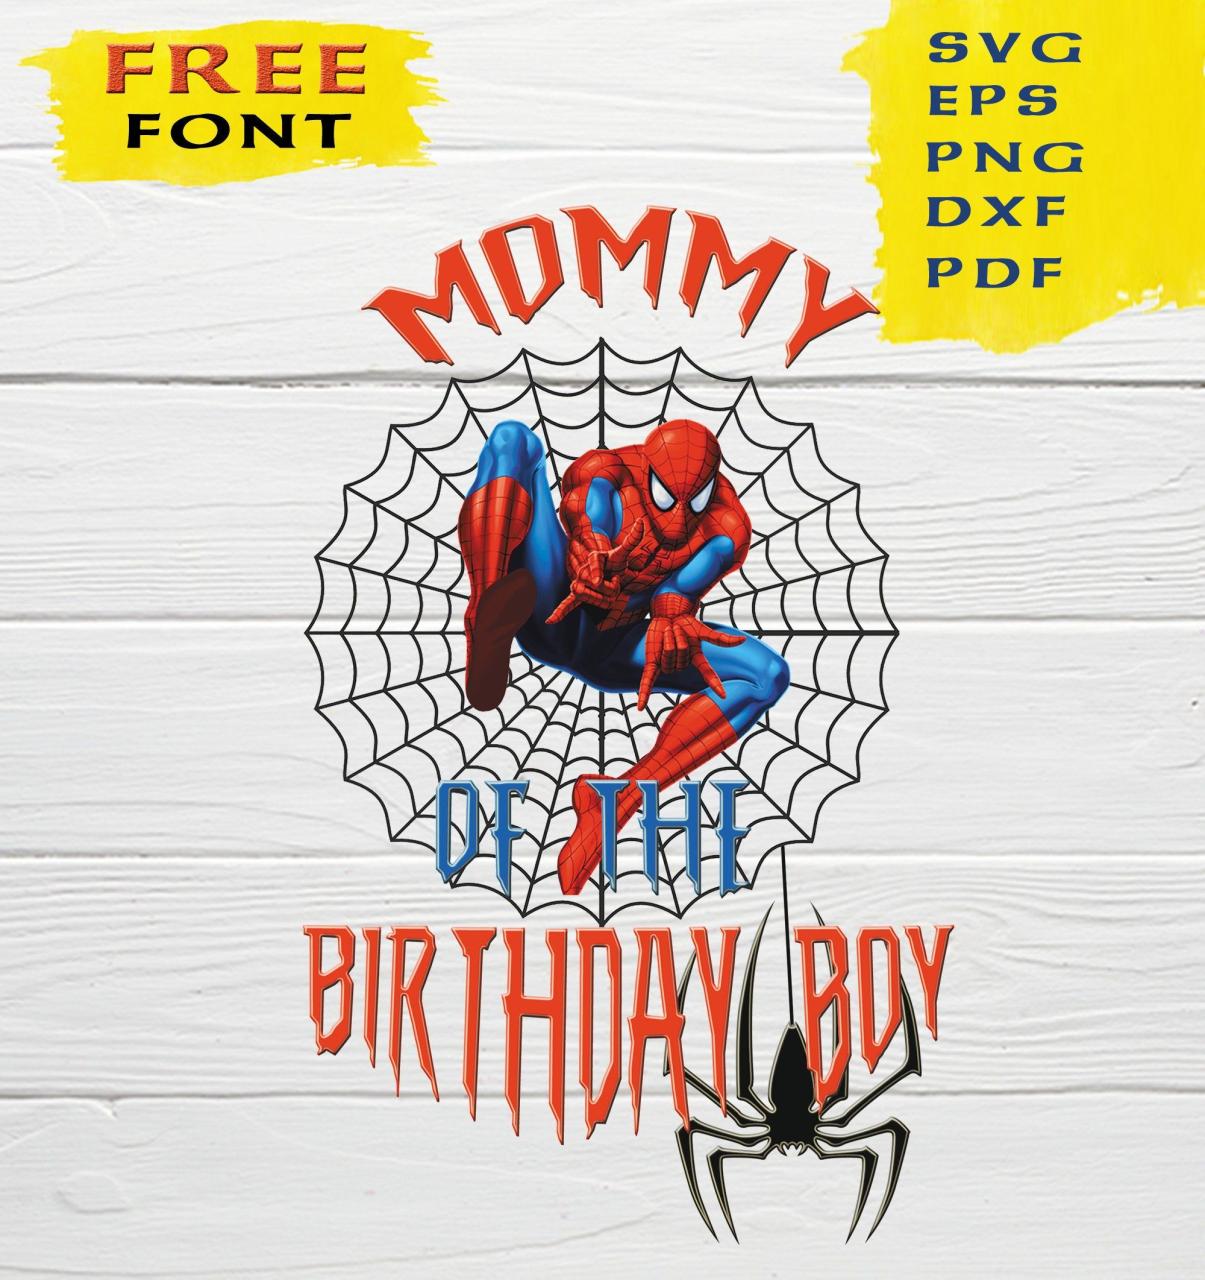 Mom of birthday boy - Spiderman Version, spiderman birthday, spiderman